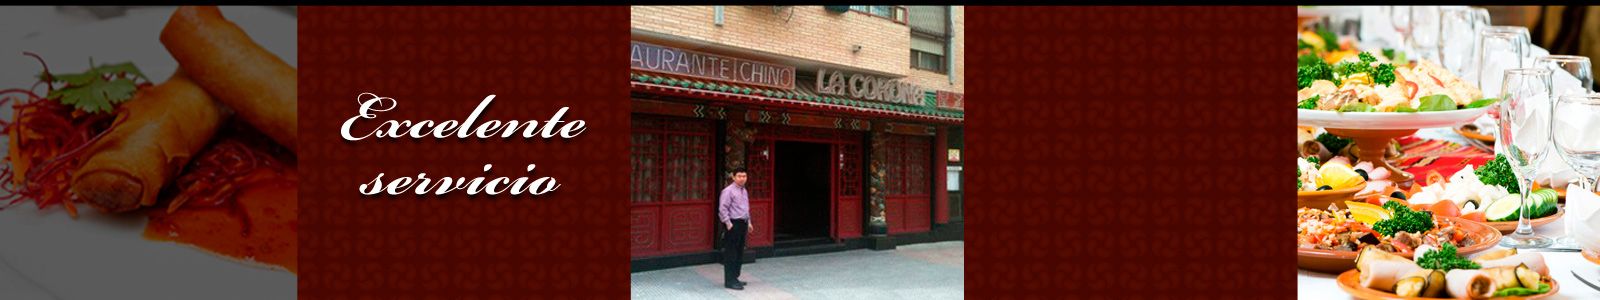 Restaurante Chino La Corona banner 2